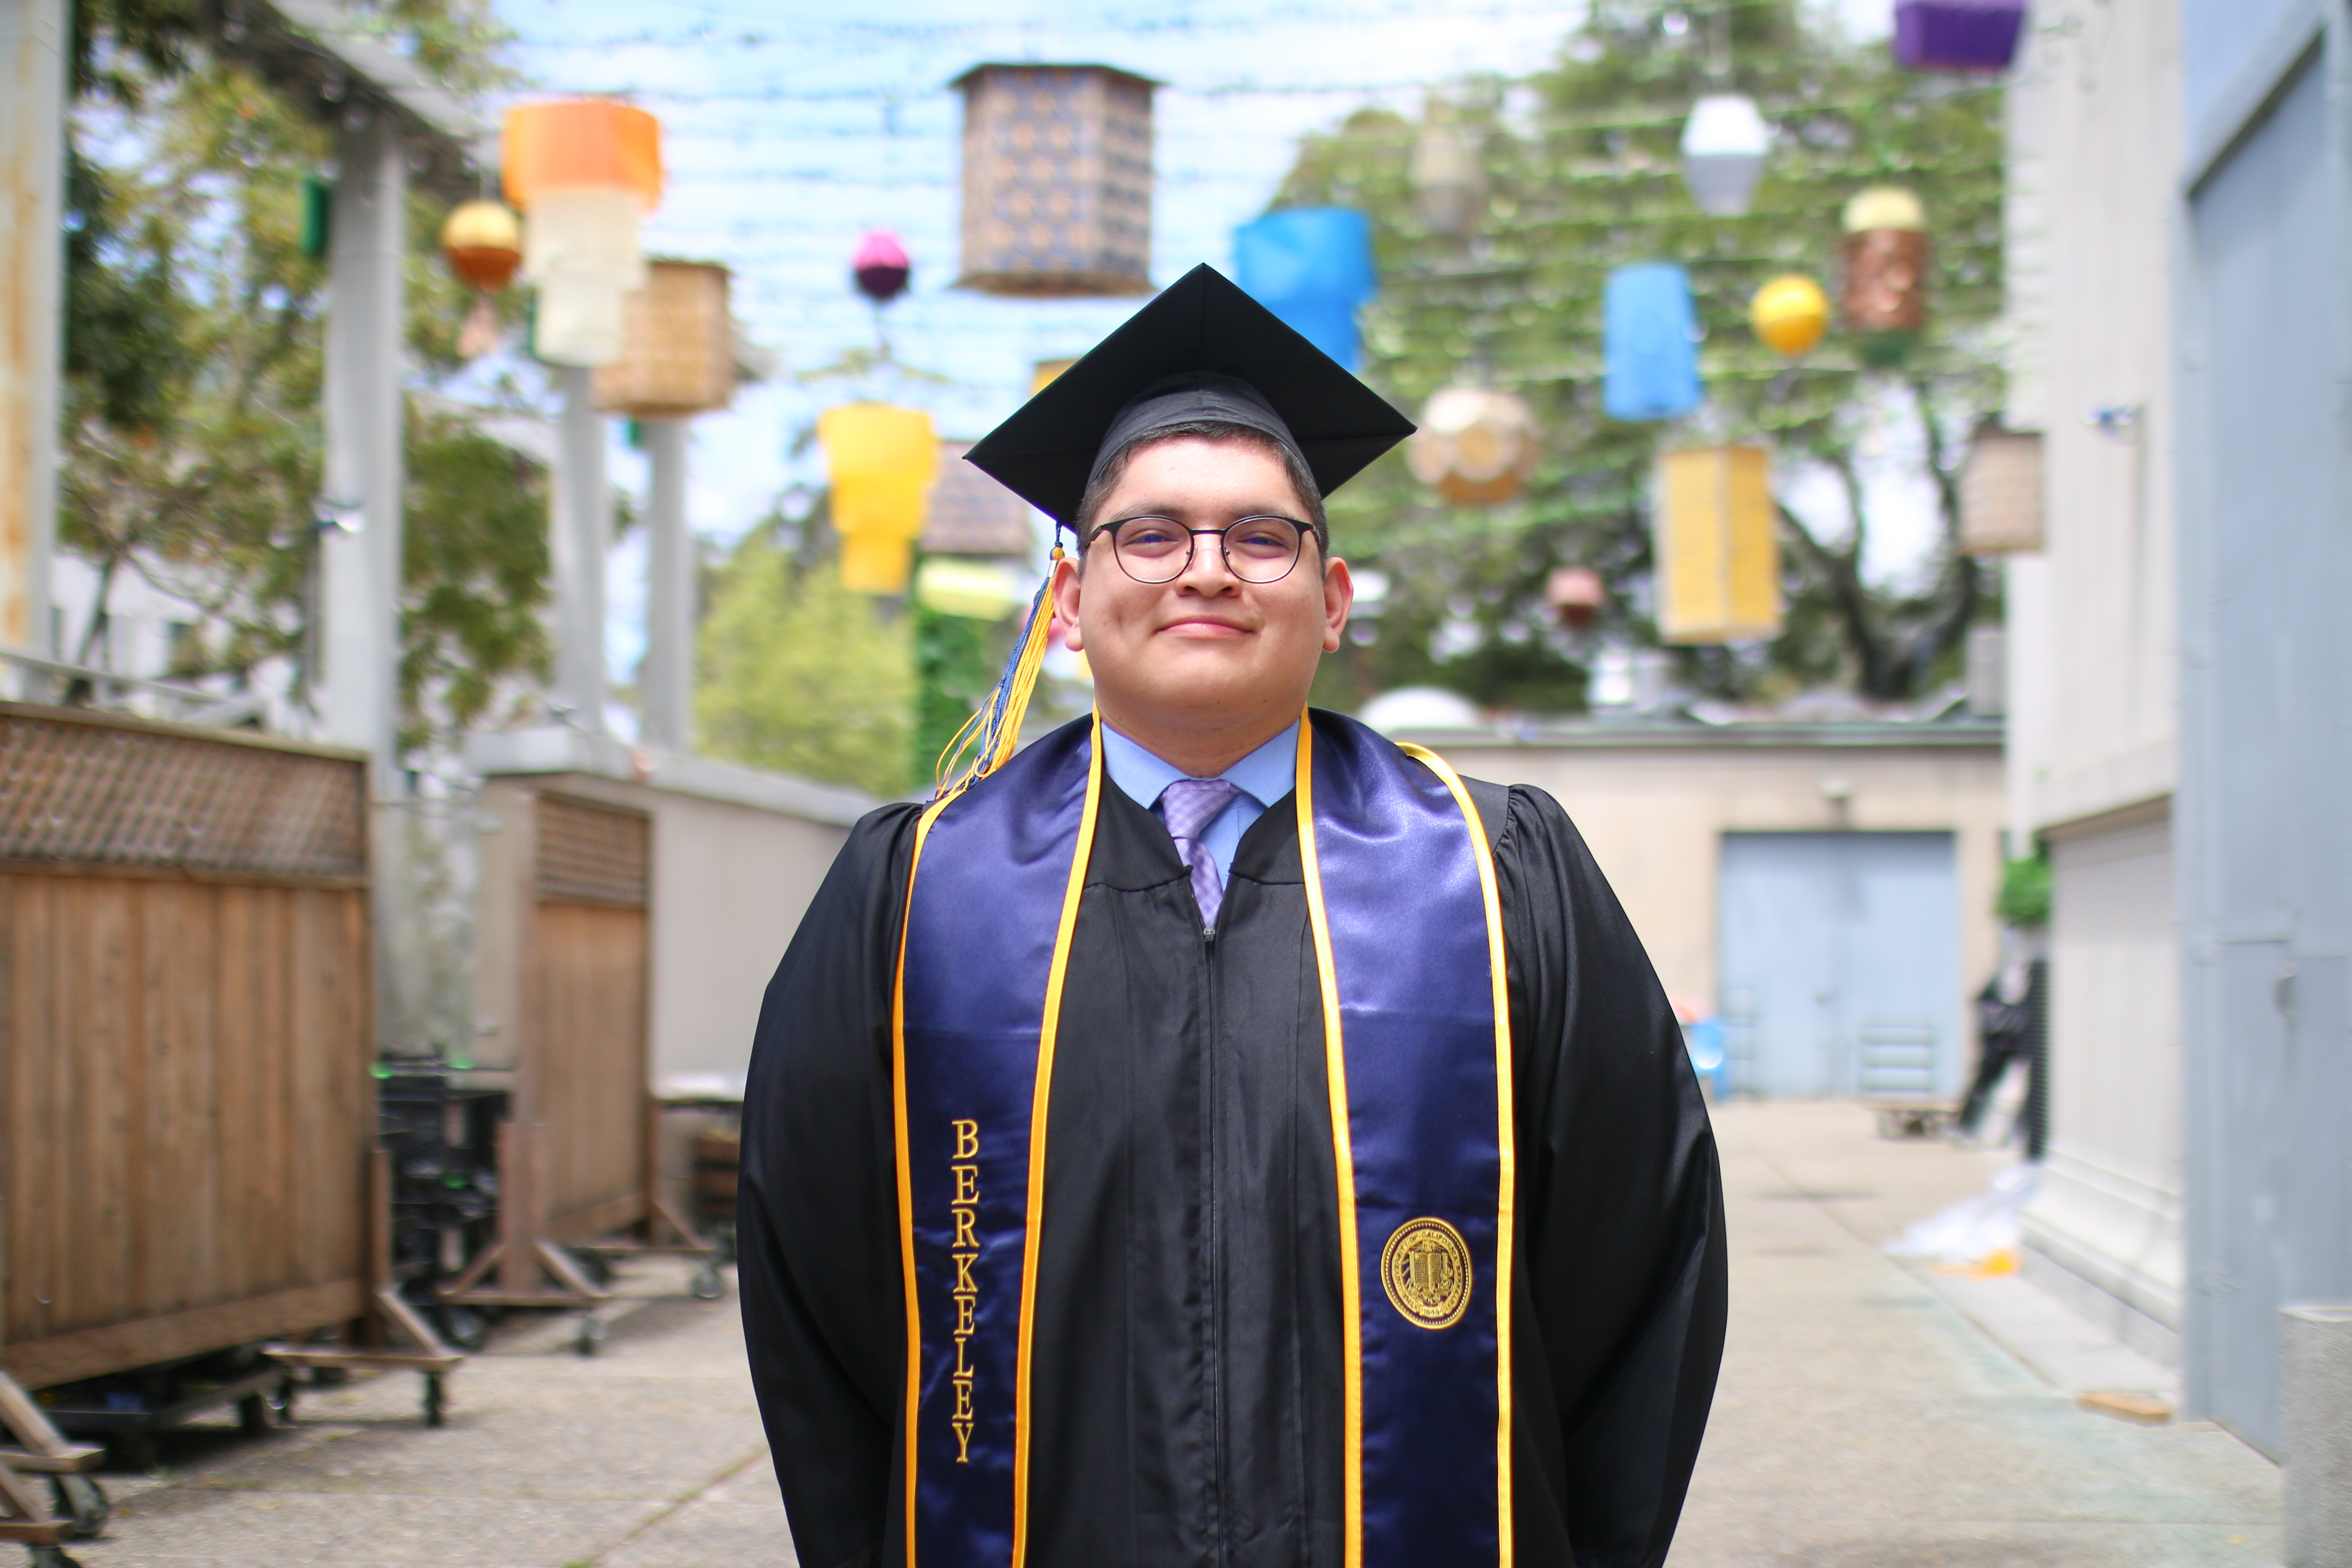  Carlos Rodrigo Huerta Juarez graduated from UC Berkeley with a degree in data science. 